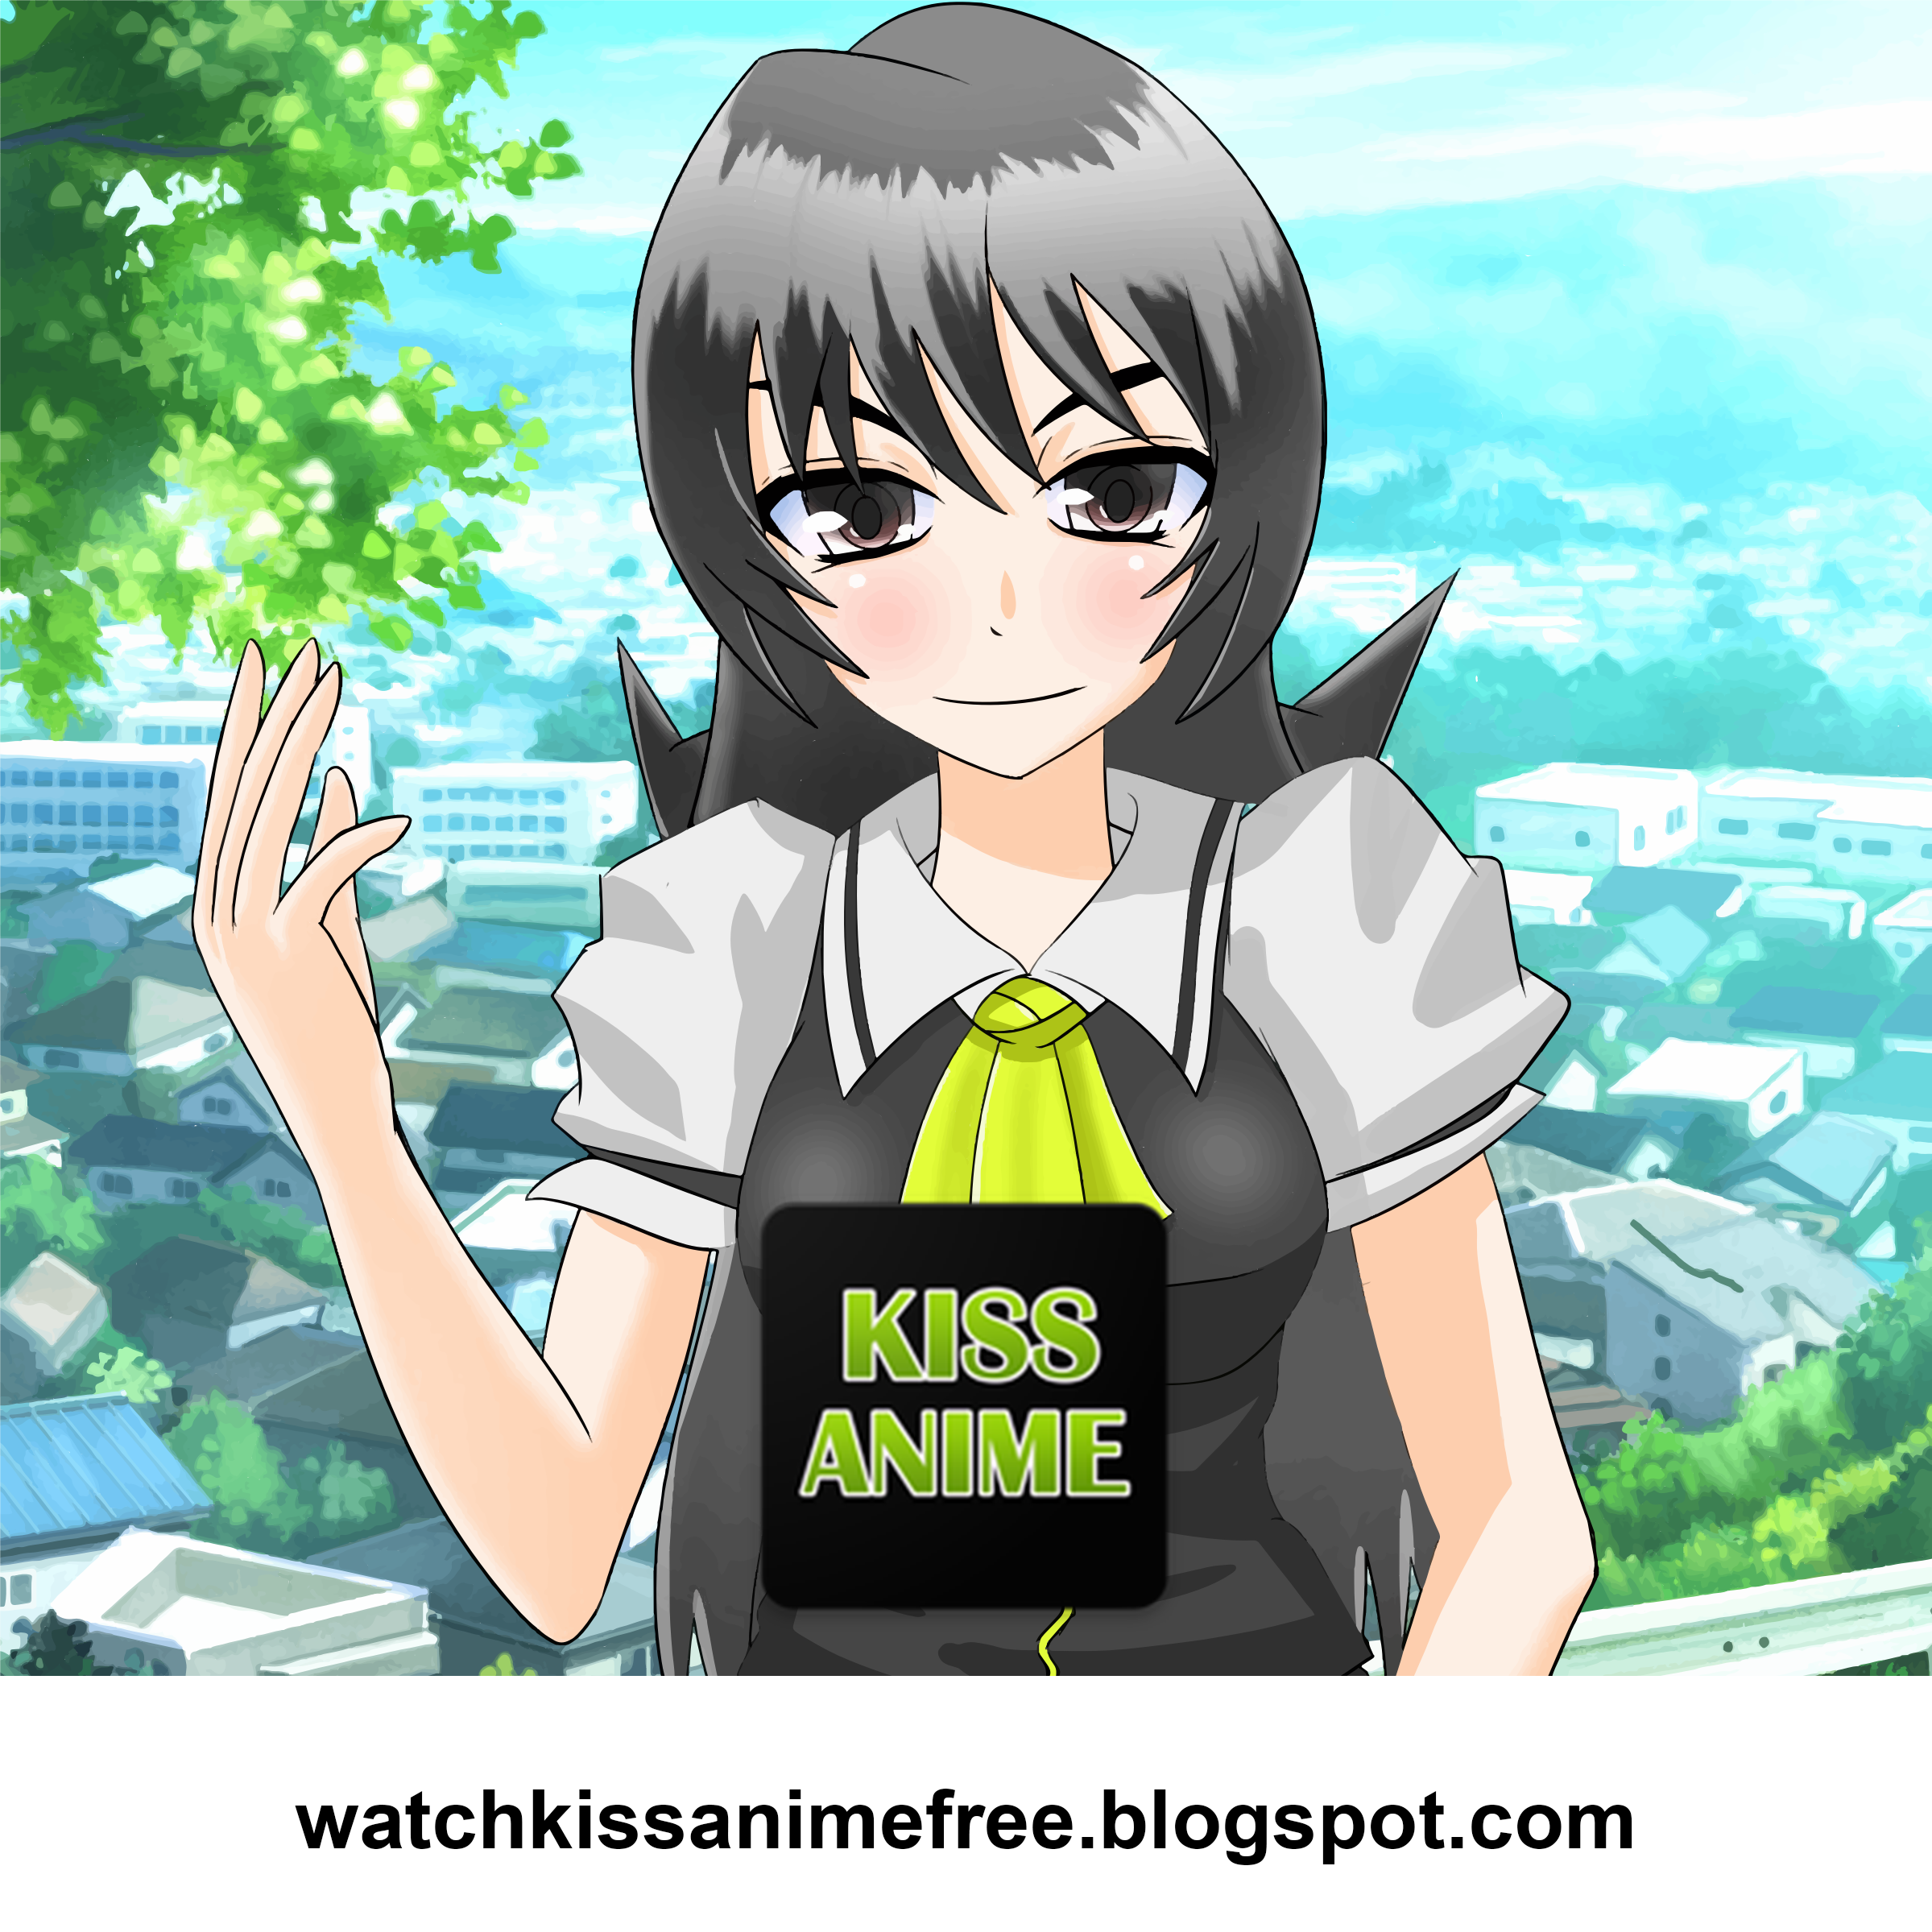 KissAnime APK para Android - Download